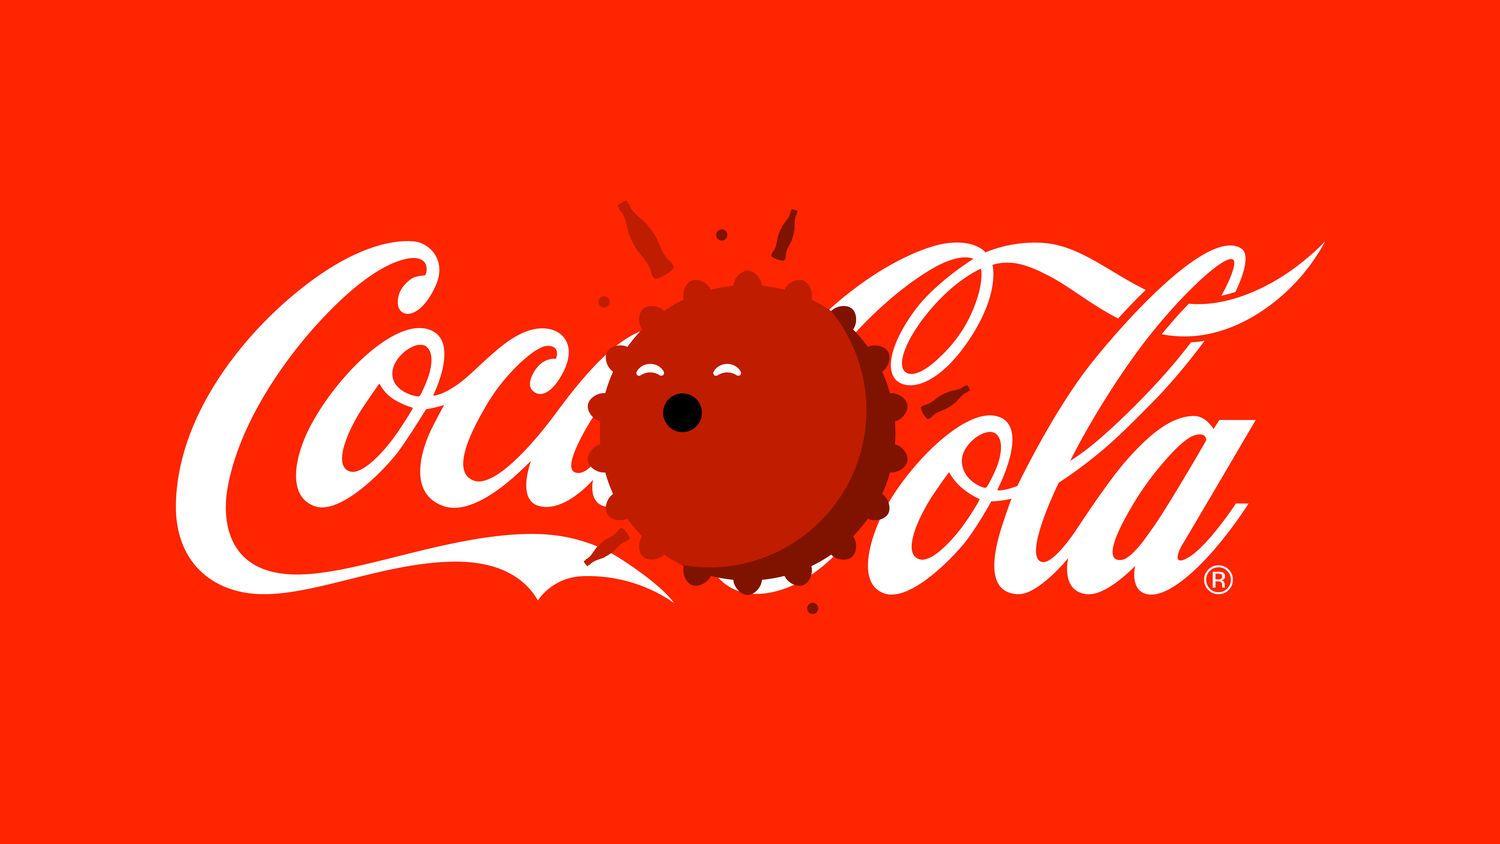 Phone Emoji Red Logo - 38 Coca-Cola Emojis by Koto